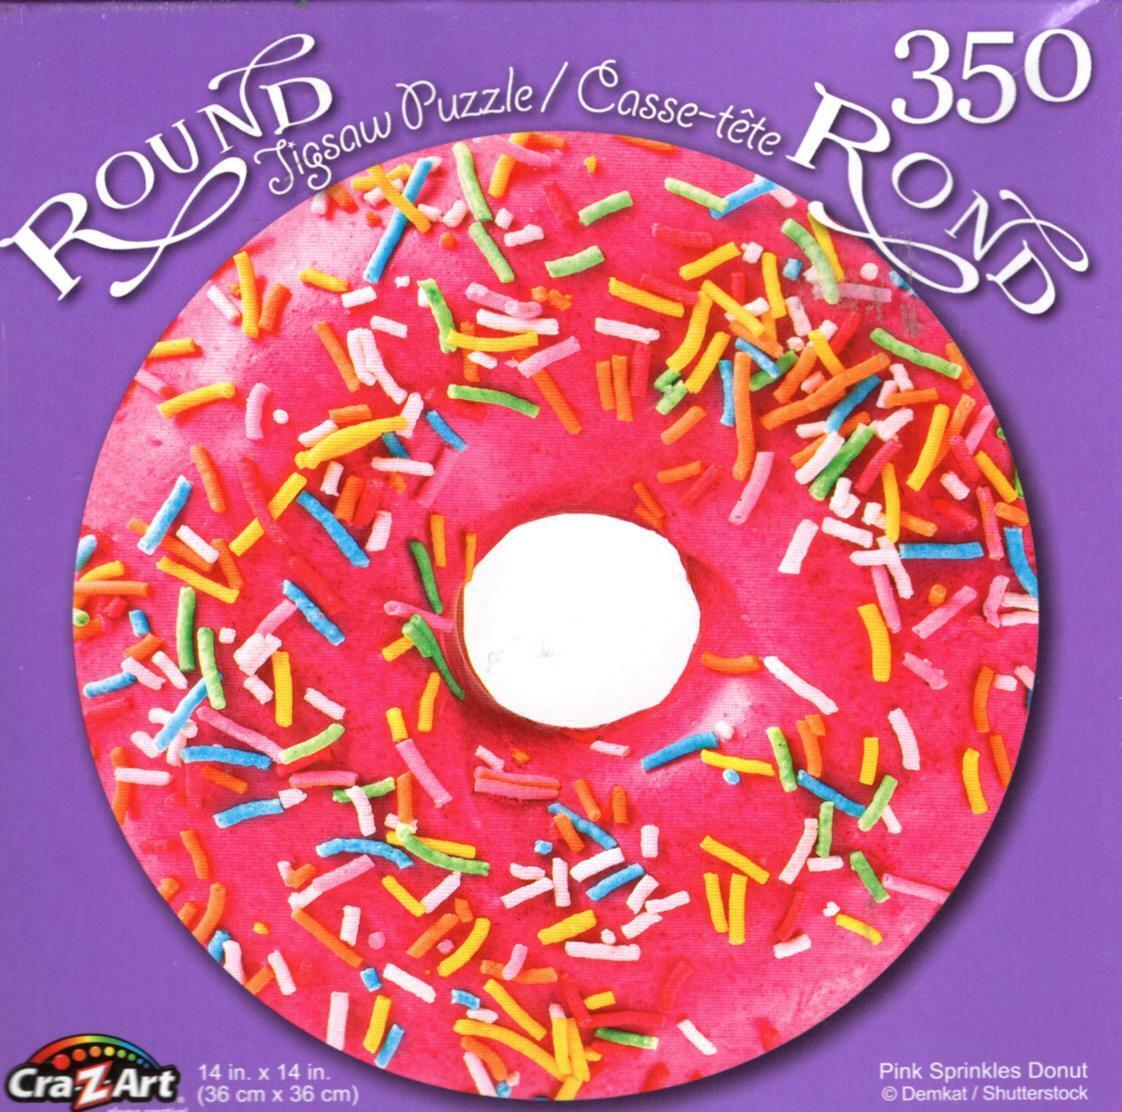 Pink Sprinkles Donut - 350 Round Piece Jigsaw Puzzle